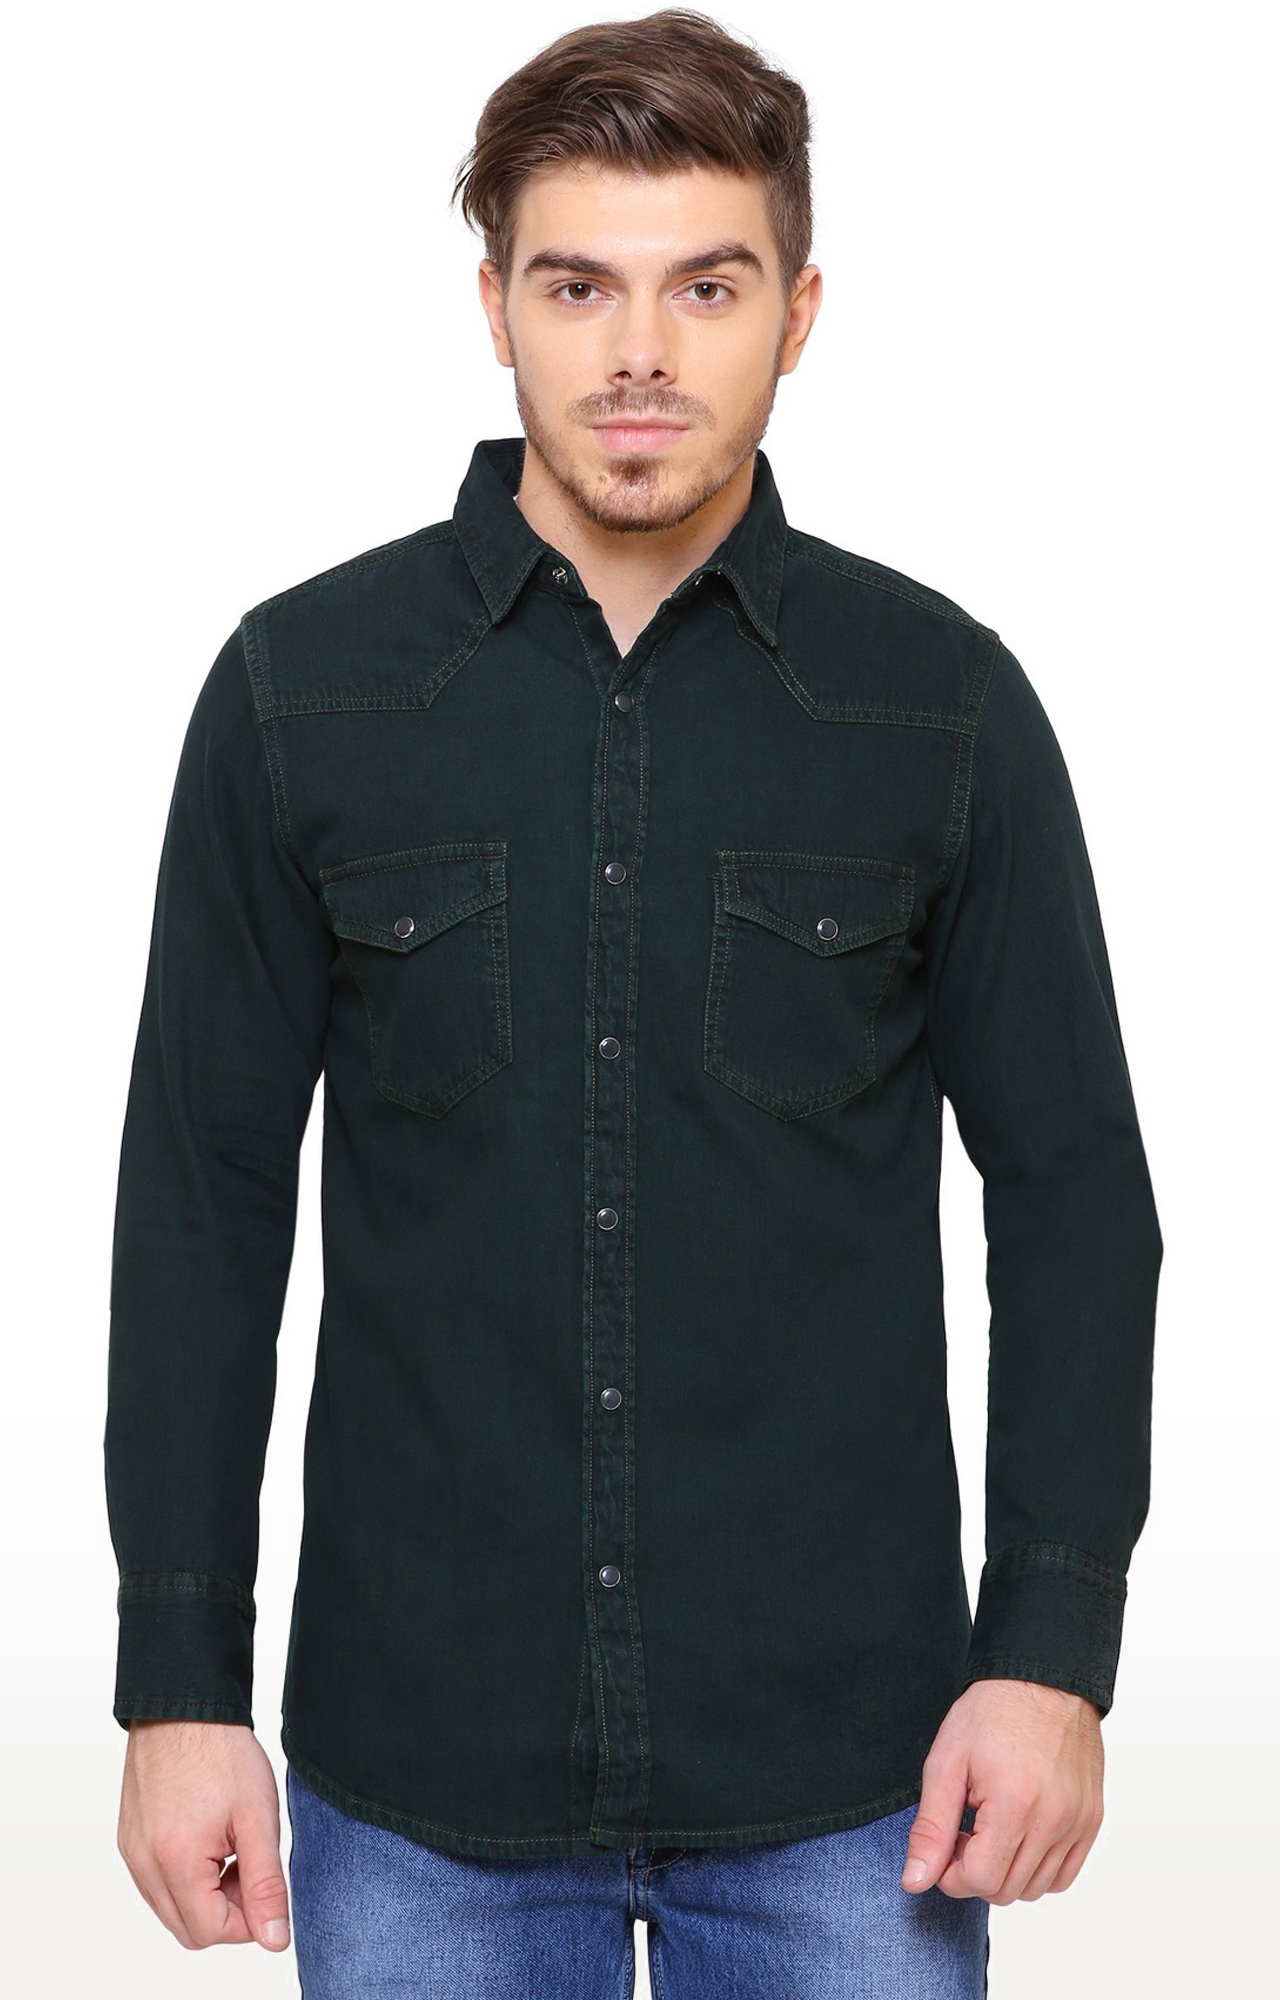 Southbay | Southbay Men's Green Casual Denim Shirt